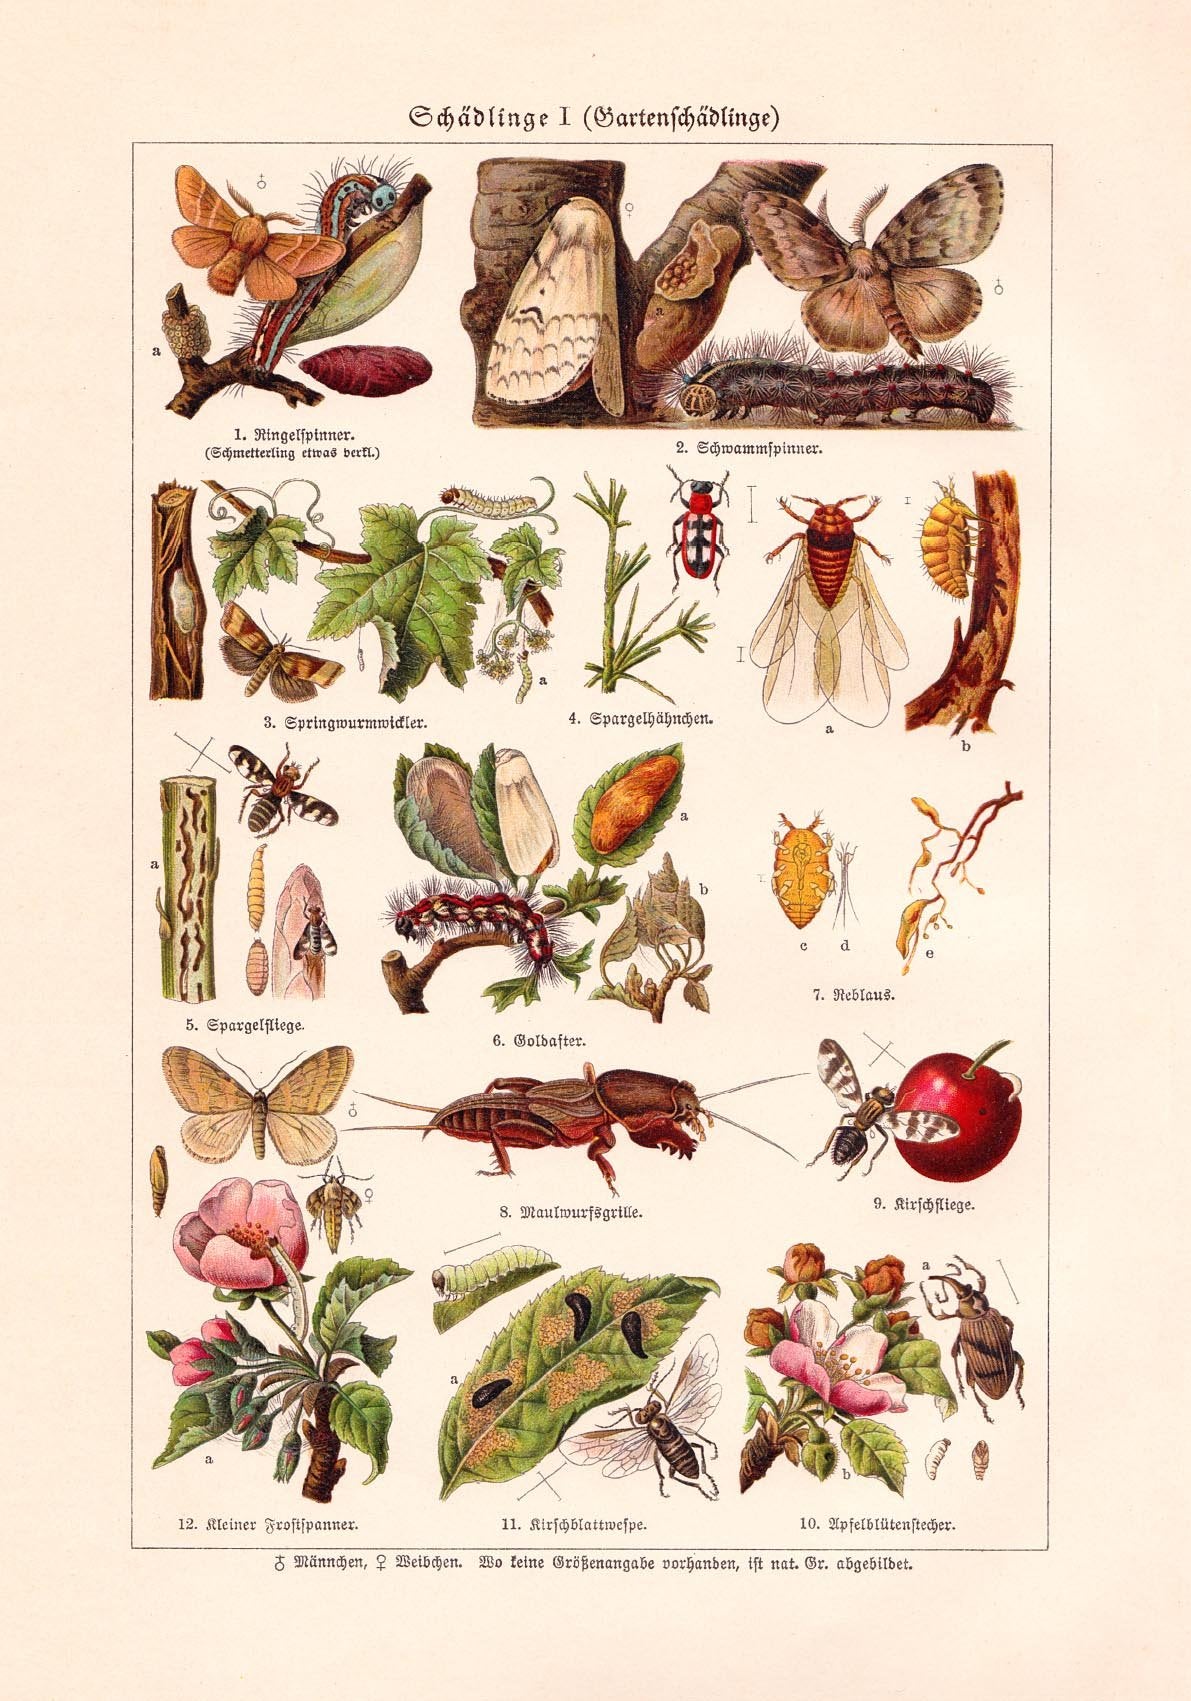 Plant Pests I Poster